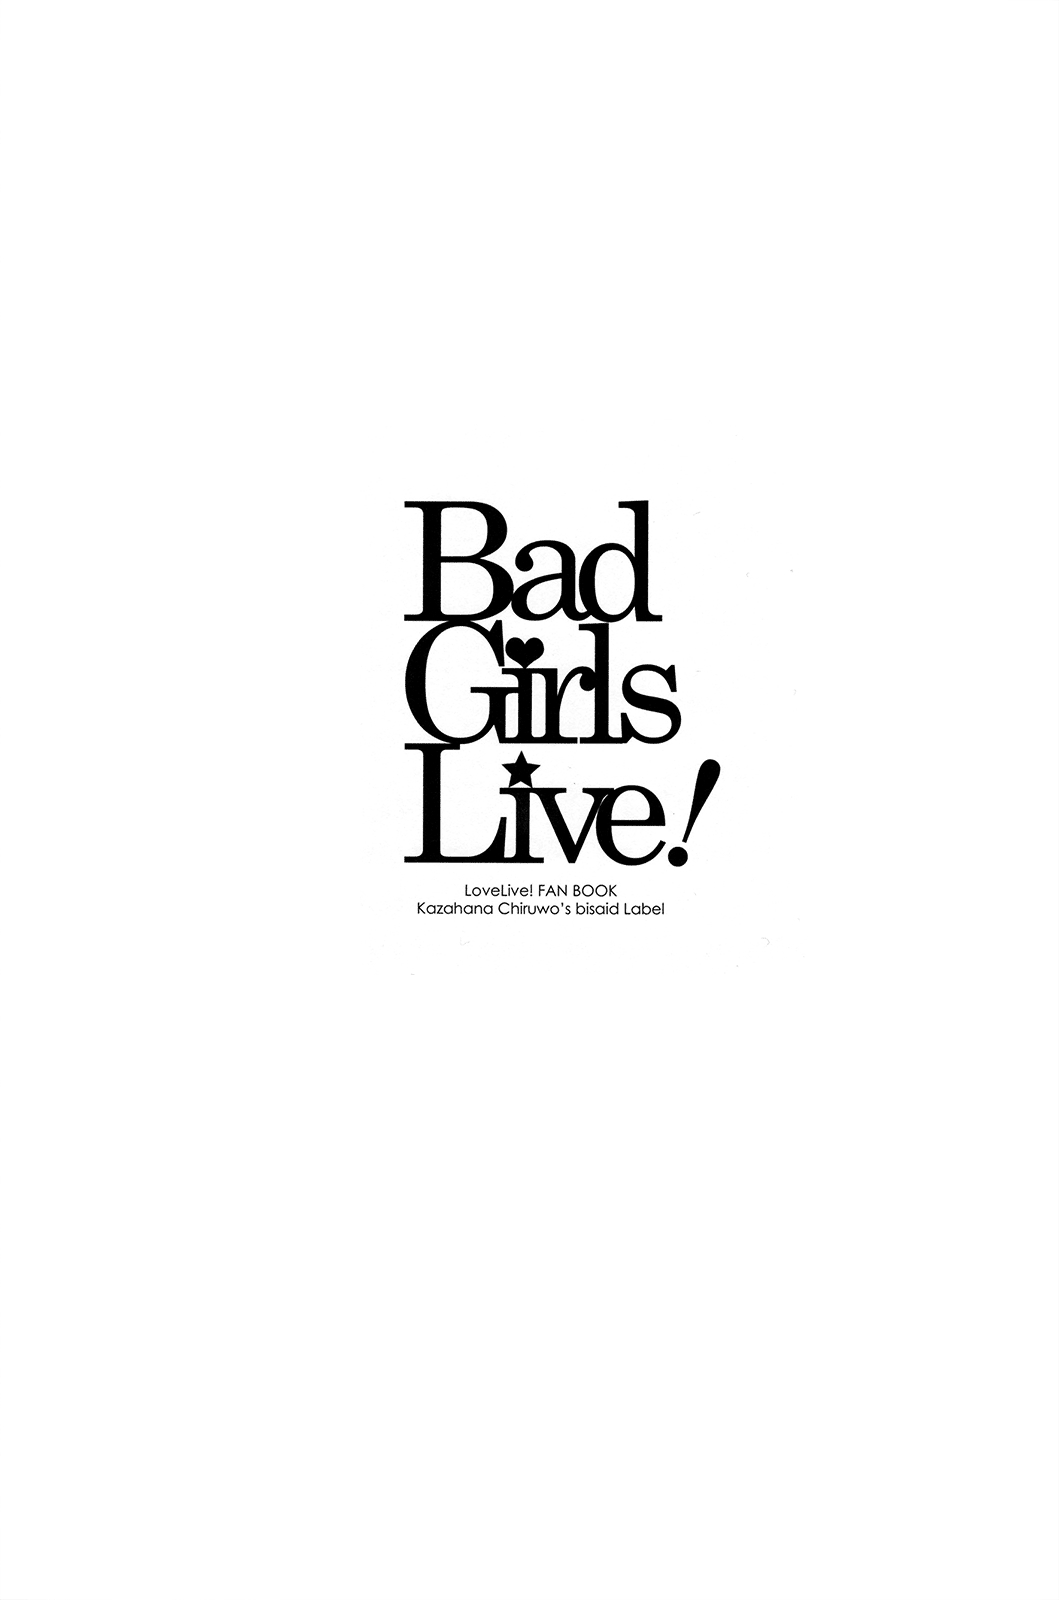 Love Live! Bad Girls Live! (Doujinshi) Oneshot